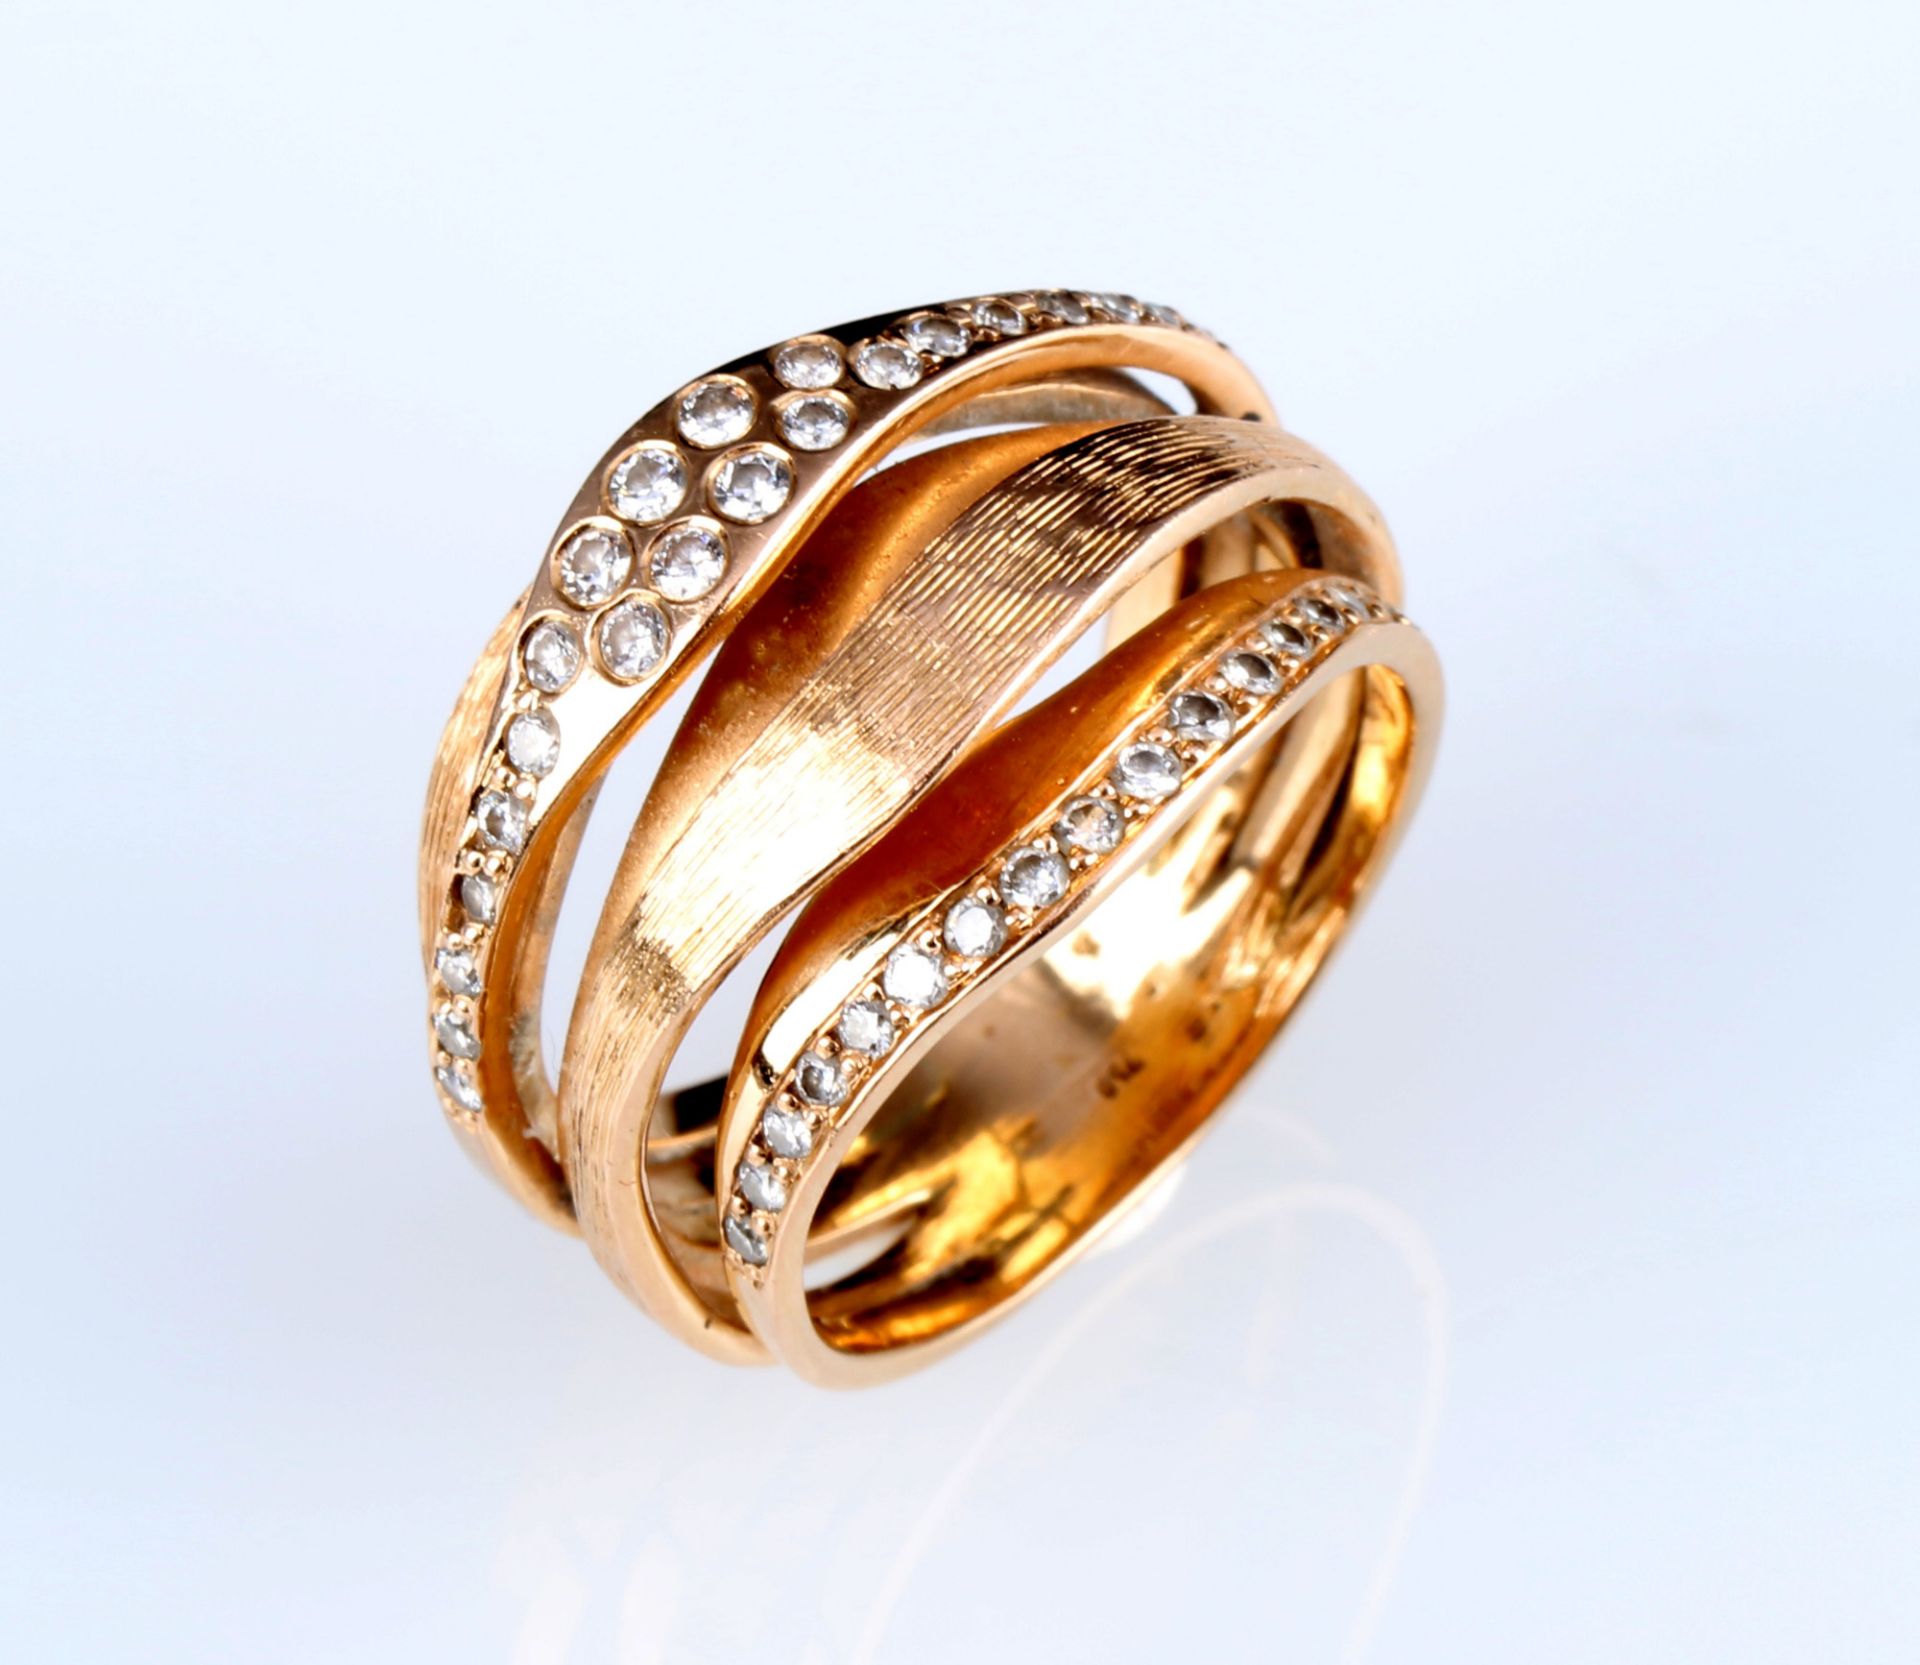 750 Gold Croisé Ring with Brilliant-Cut Diamonds, - Image 5 of 6